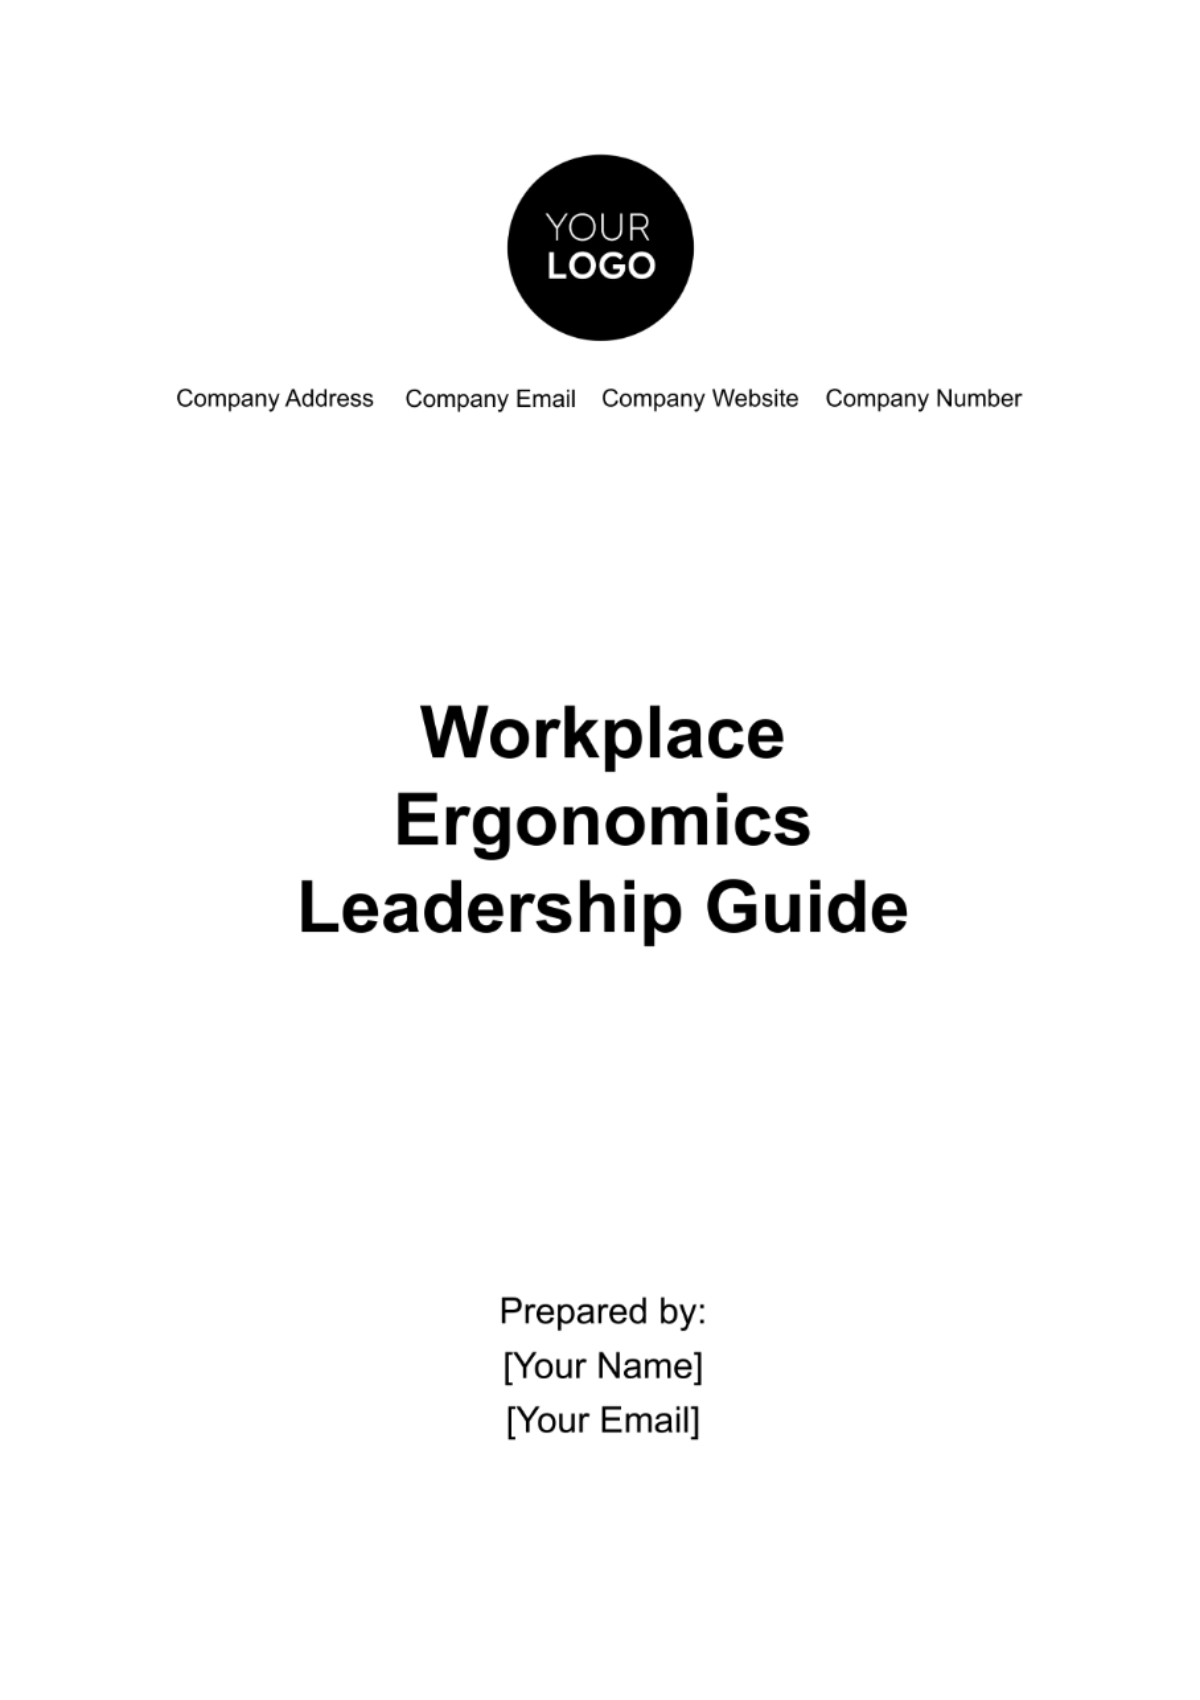 Workplace Ergonomics Leadership Guide Template